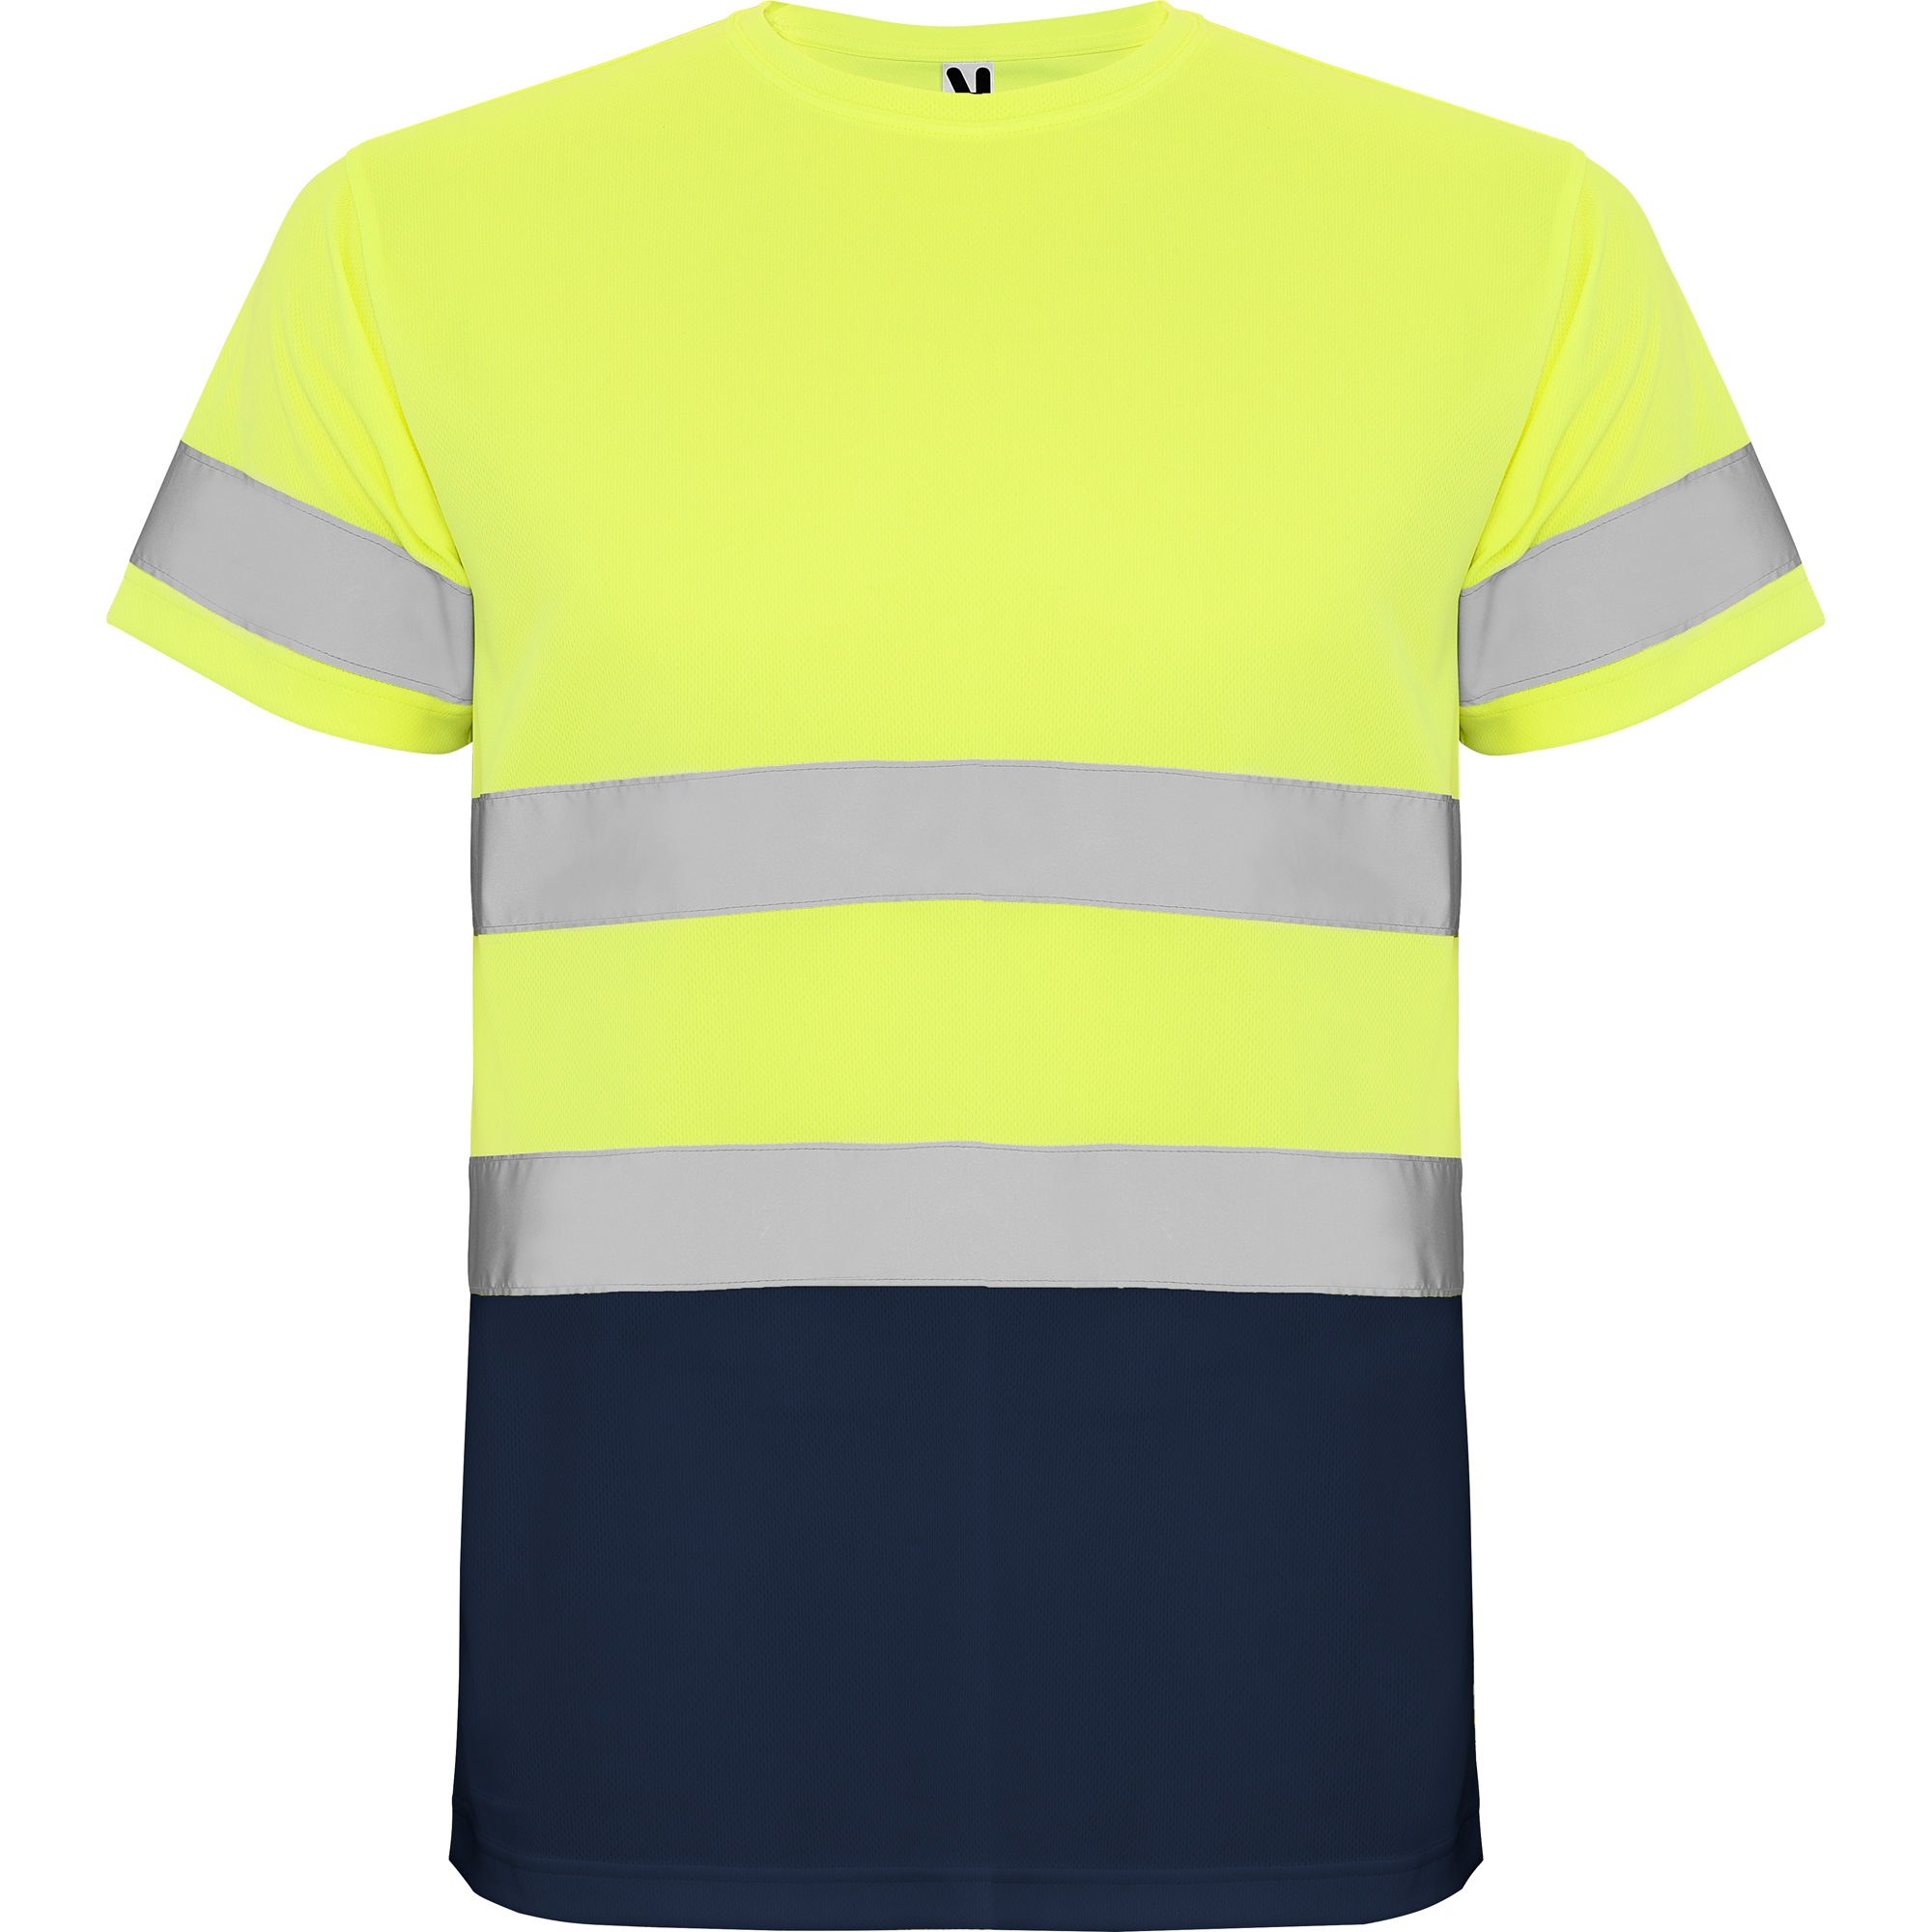 r9310-roly-delta-t-shirt-uomo-alta-visibilita-navy-blue-fluor-yellow.jpg